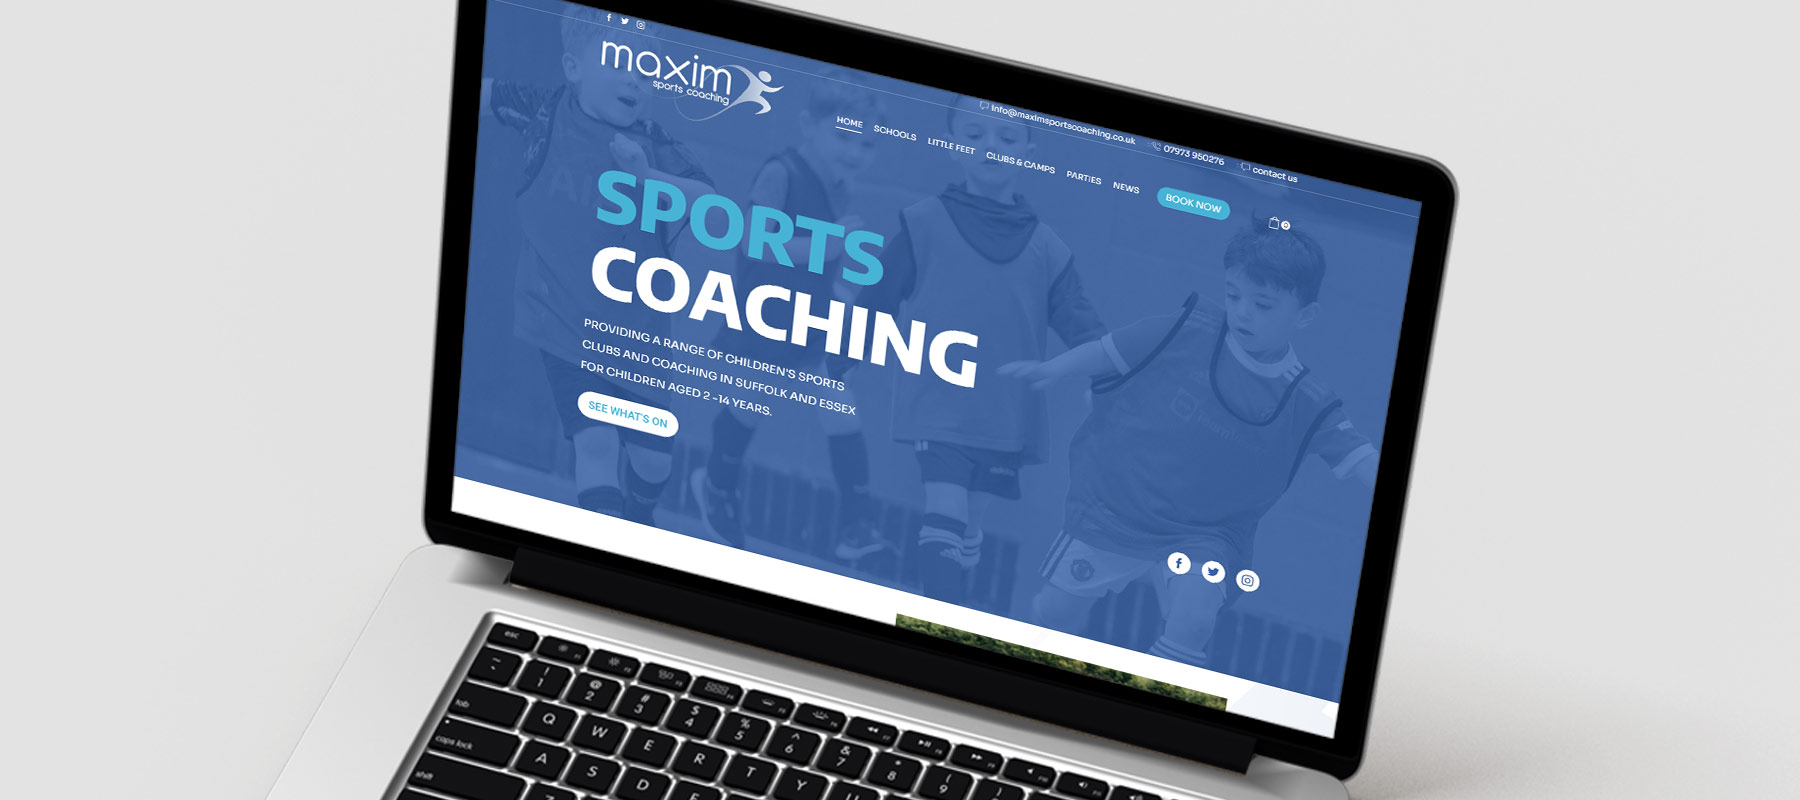 Maxim Sports Coaching Web Design and Development by Indigo Ross, Sudbury, Suffolk